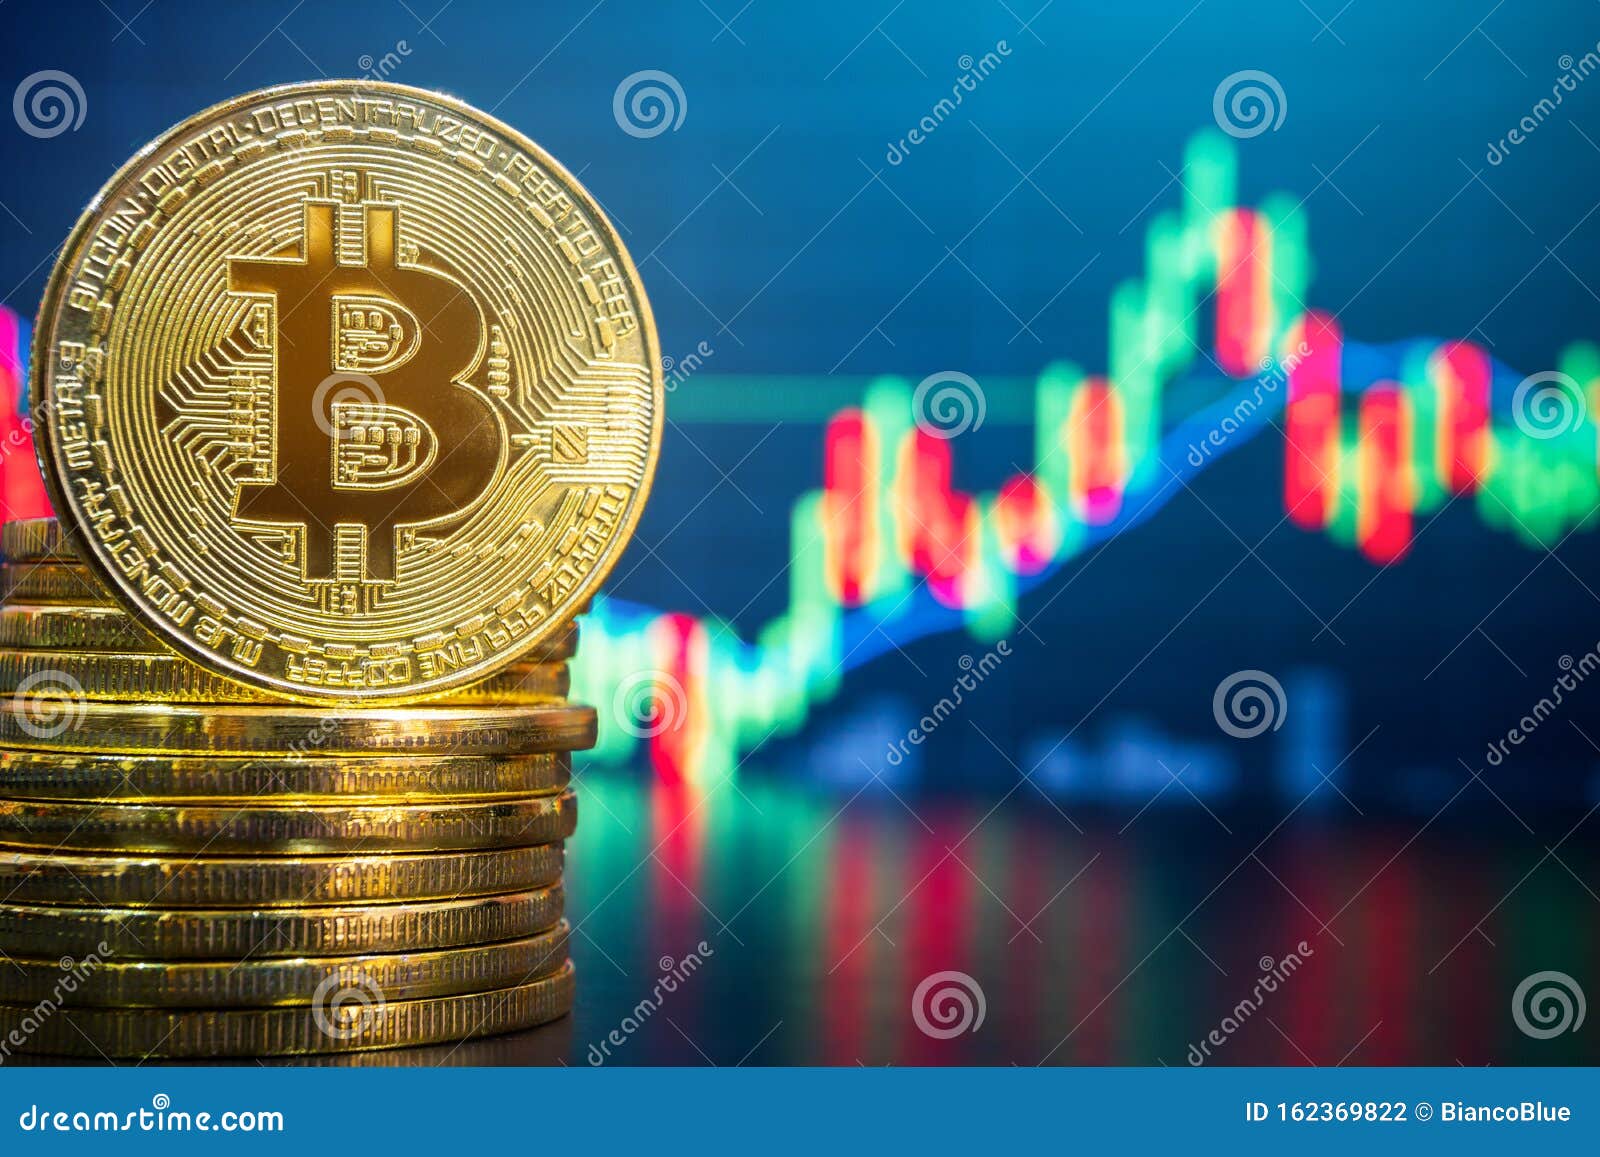 bitcoin trade exchanges